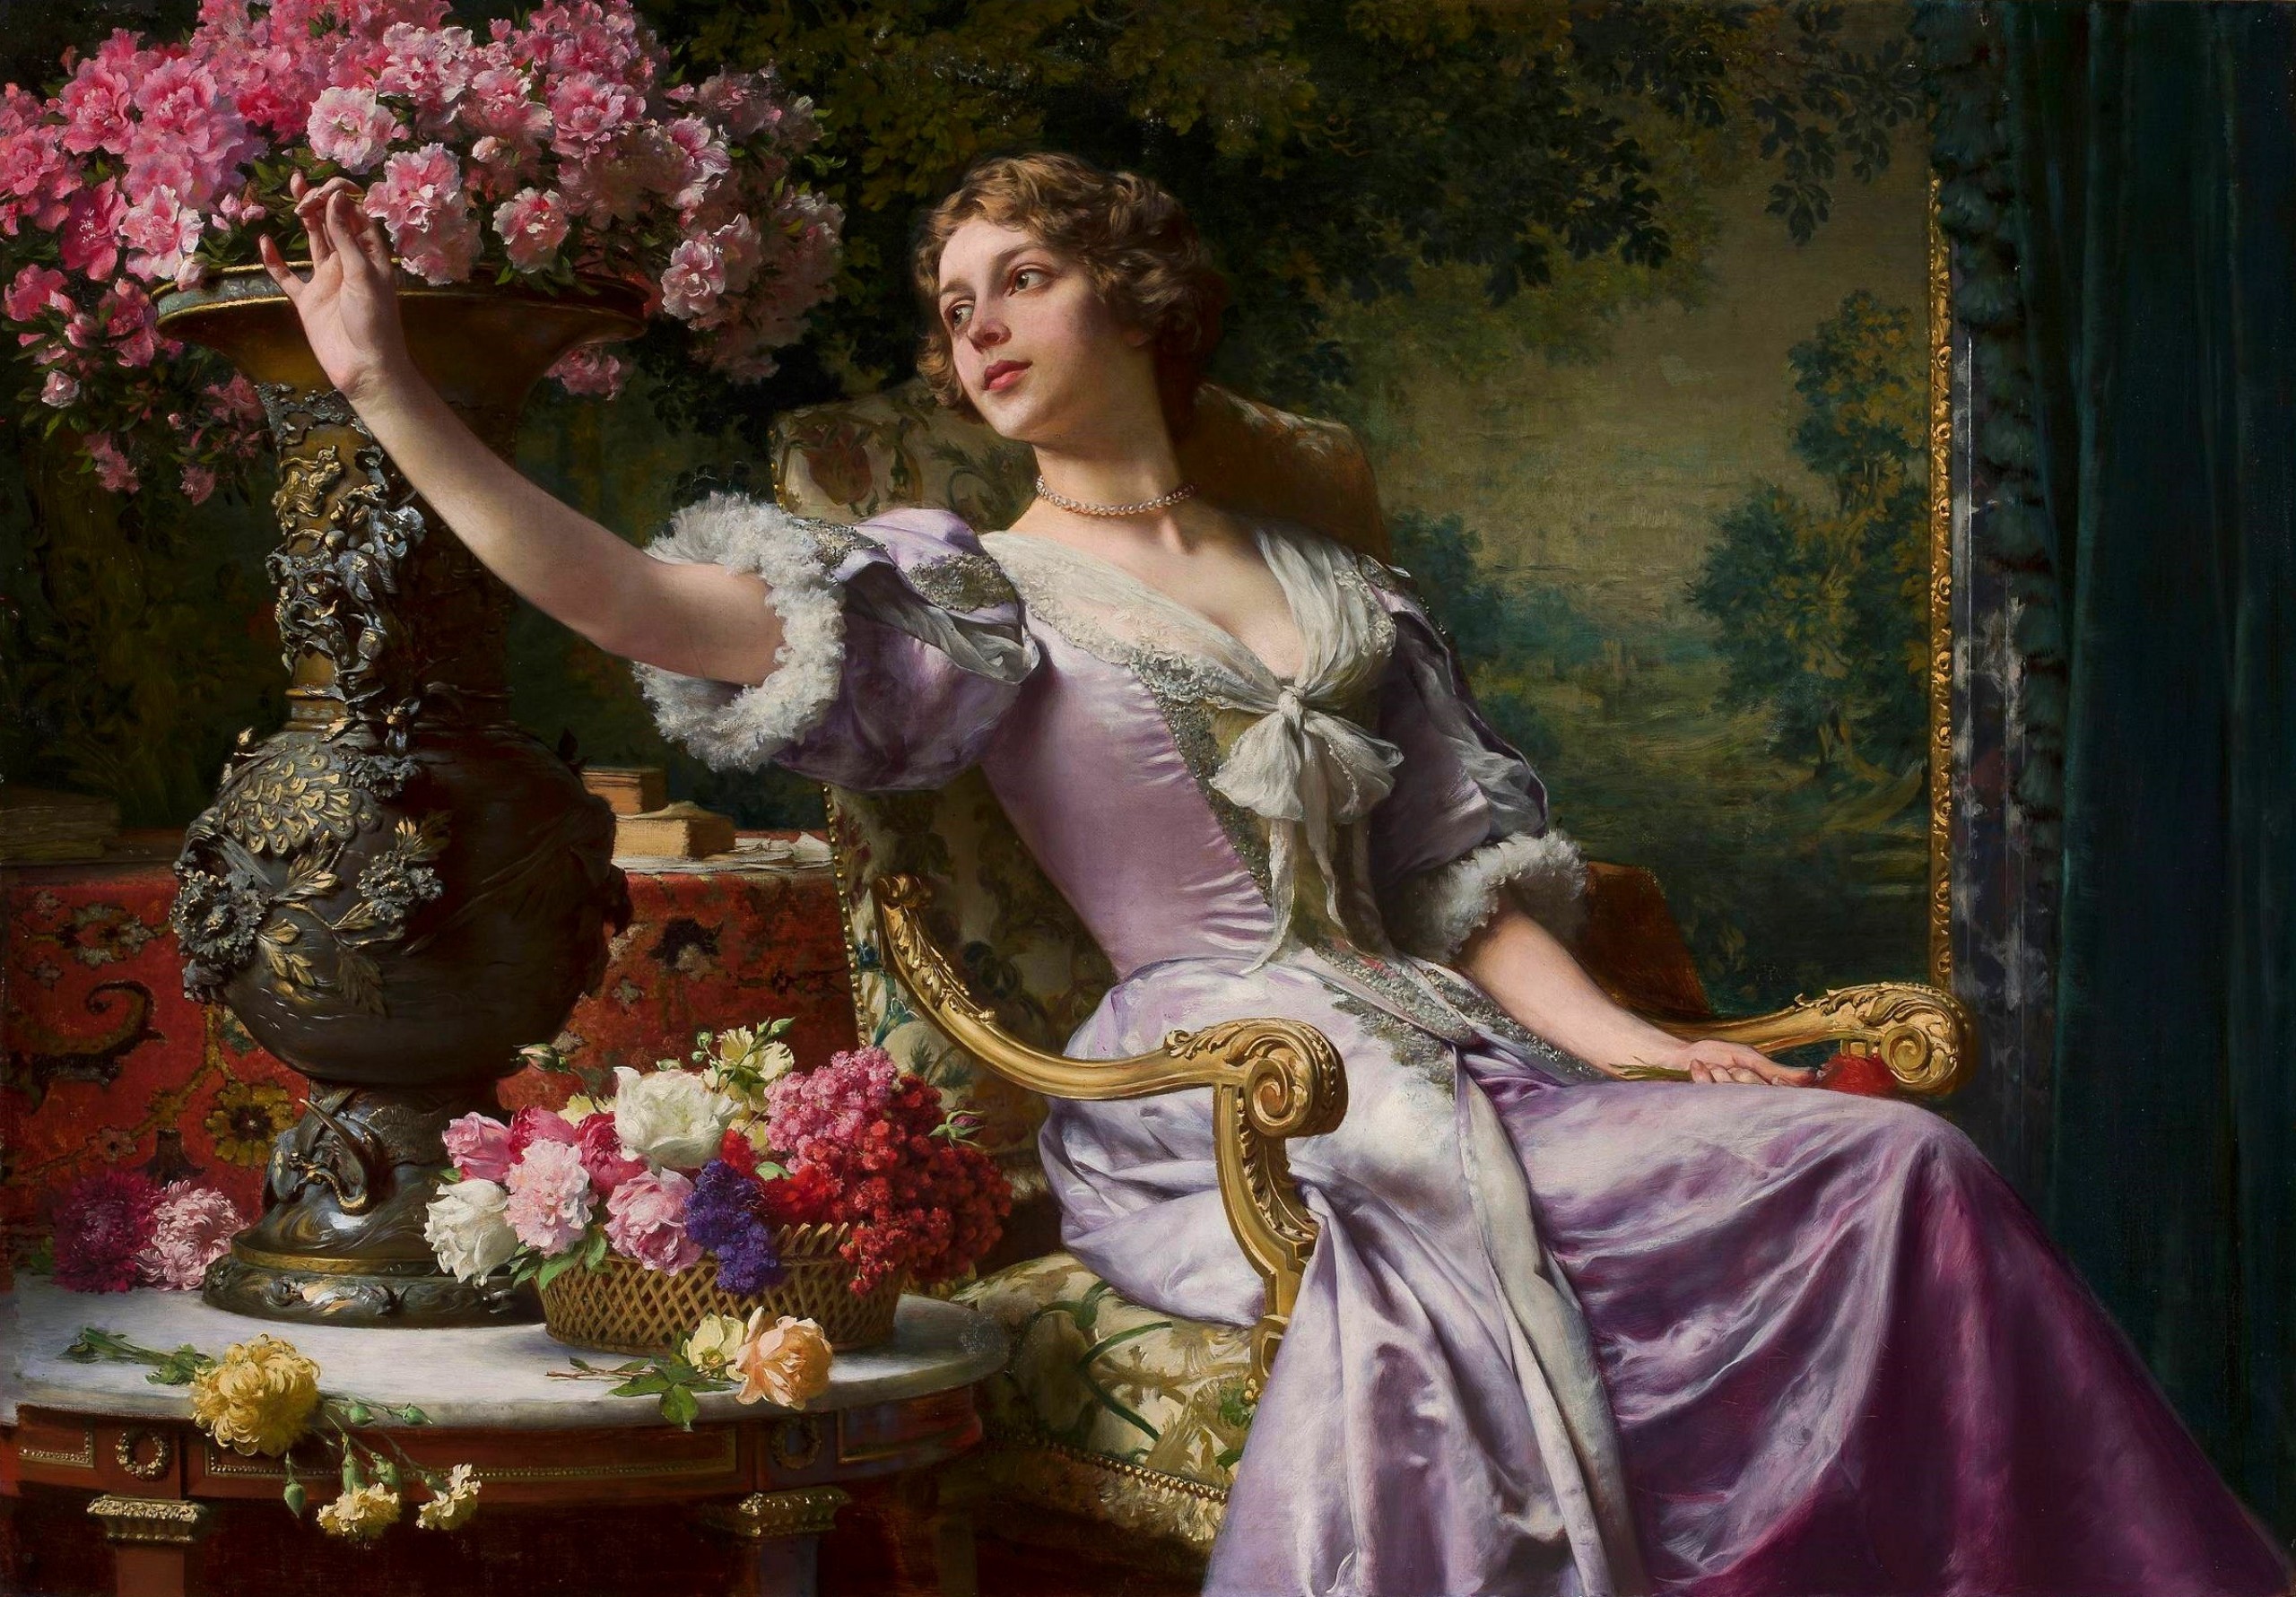 Tranh sơn dầu cổ điển A lady in a lilac dress with flowers. For him - Wladyslaw Czachorski